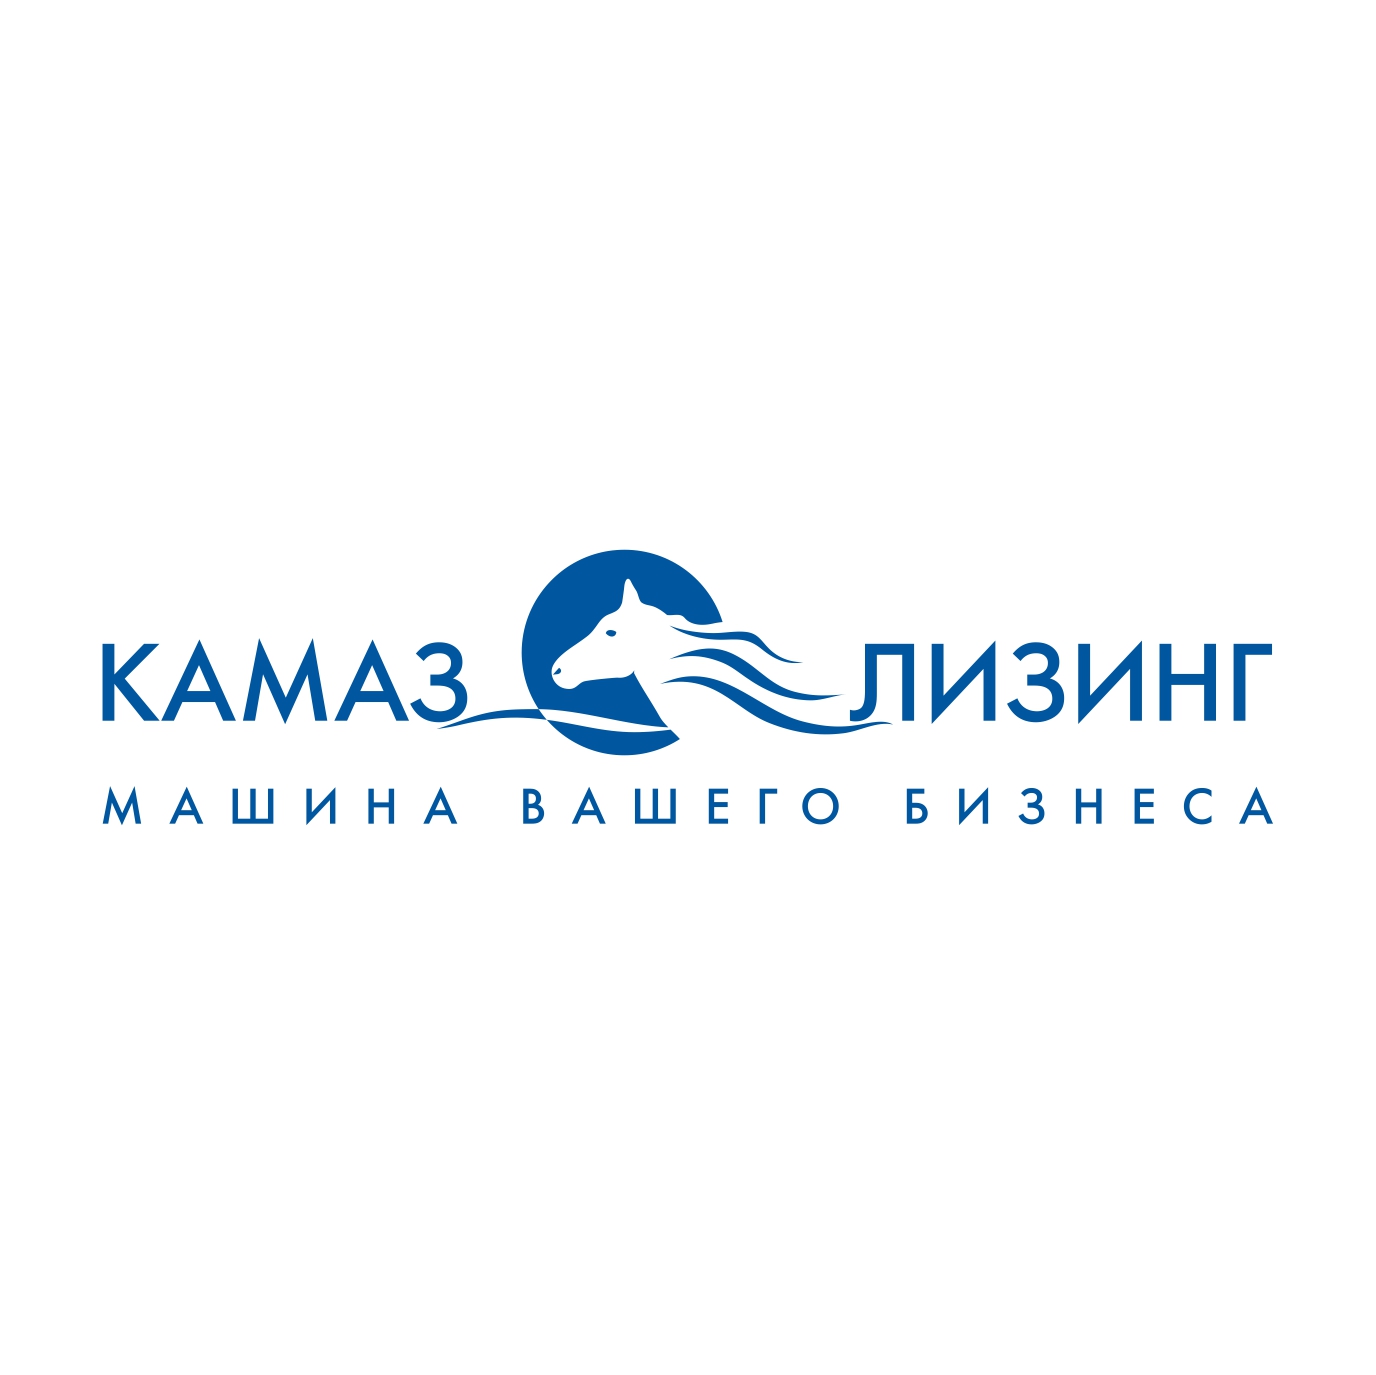 Электронный документооборот от «КАМАЗ-ЛИЗИНГа»